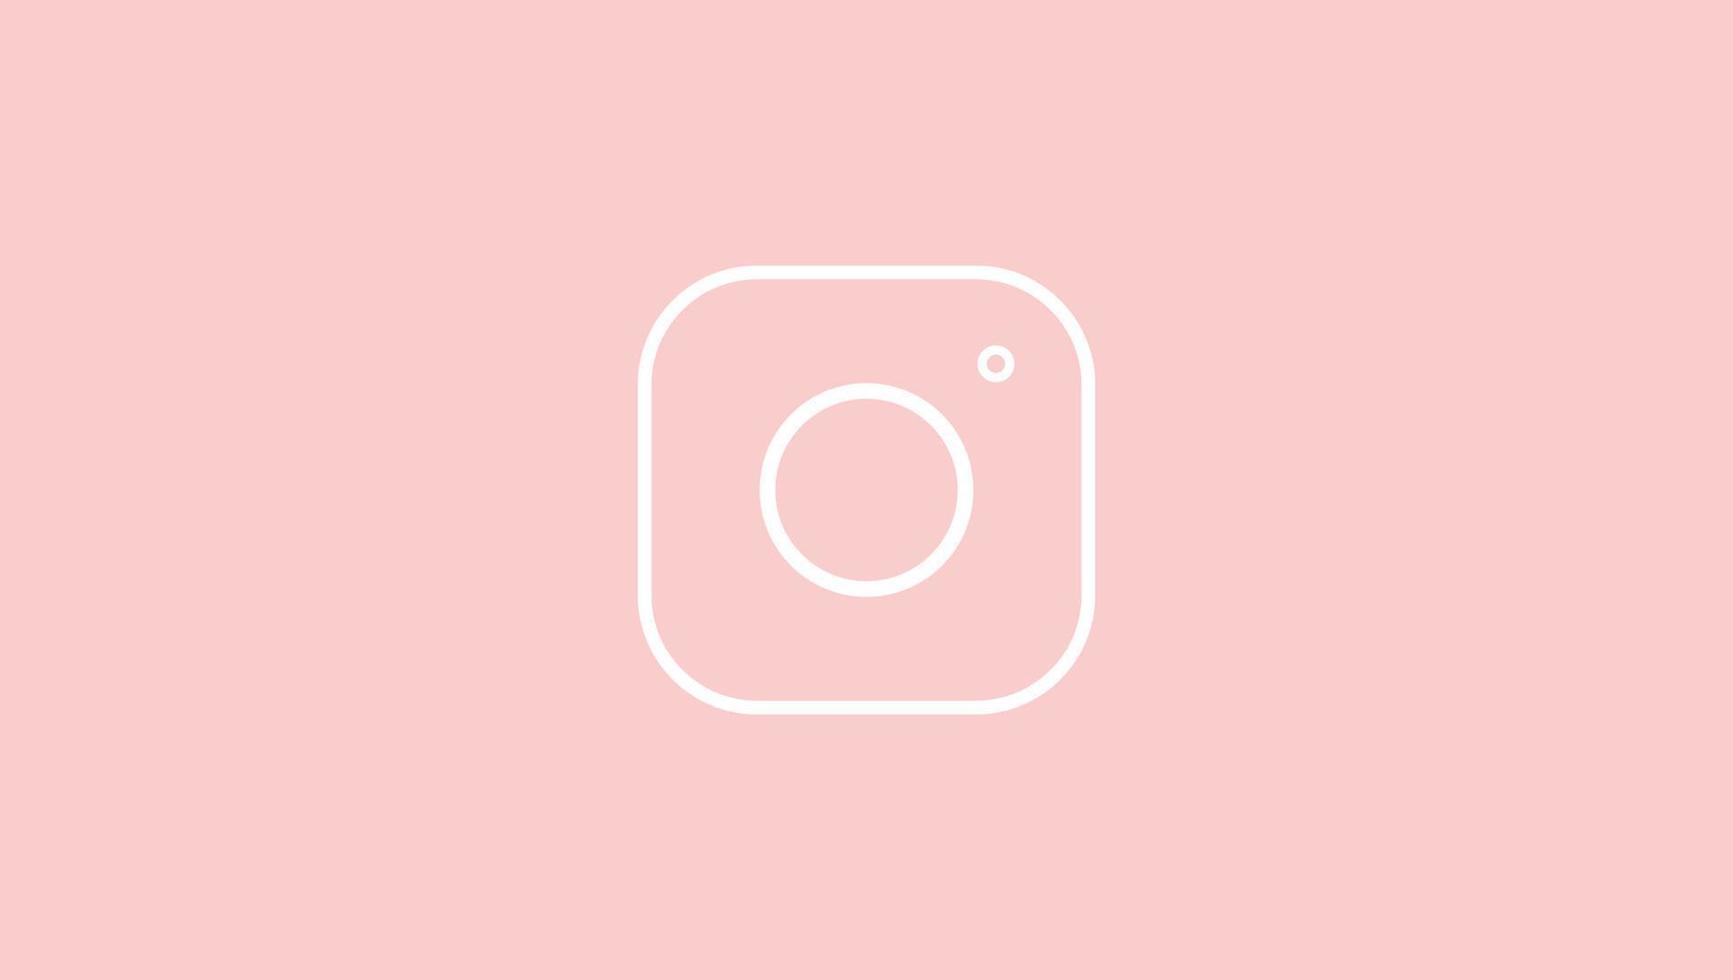 fundo do logotipo do instagram vetor